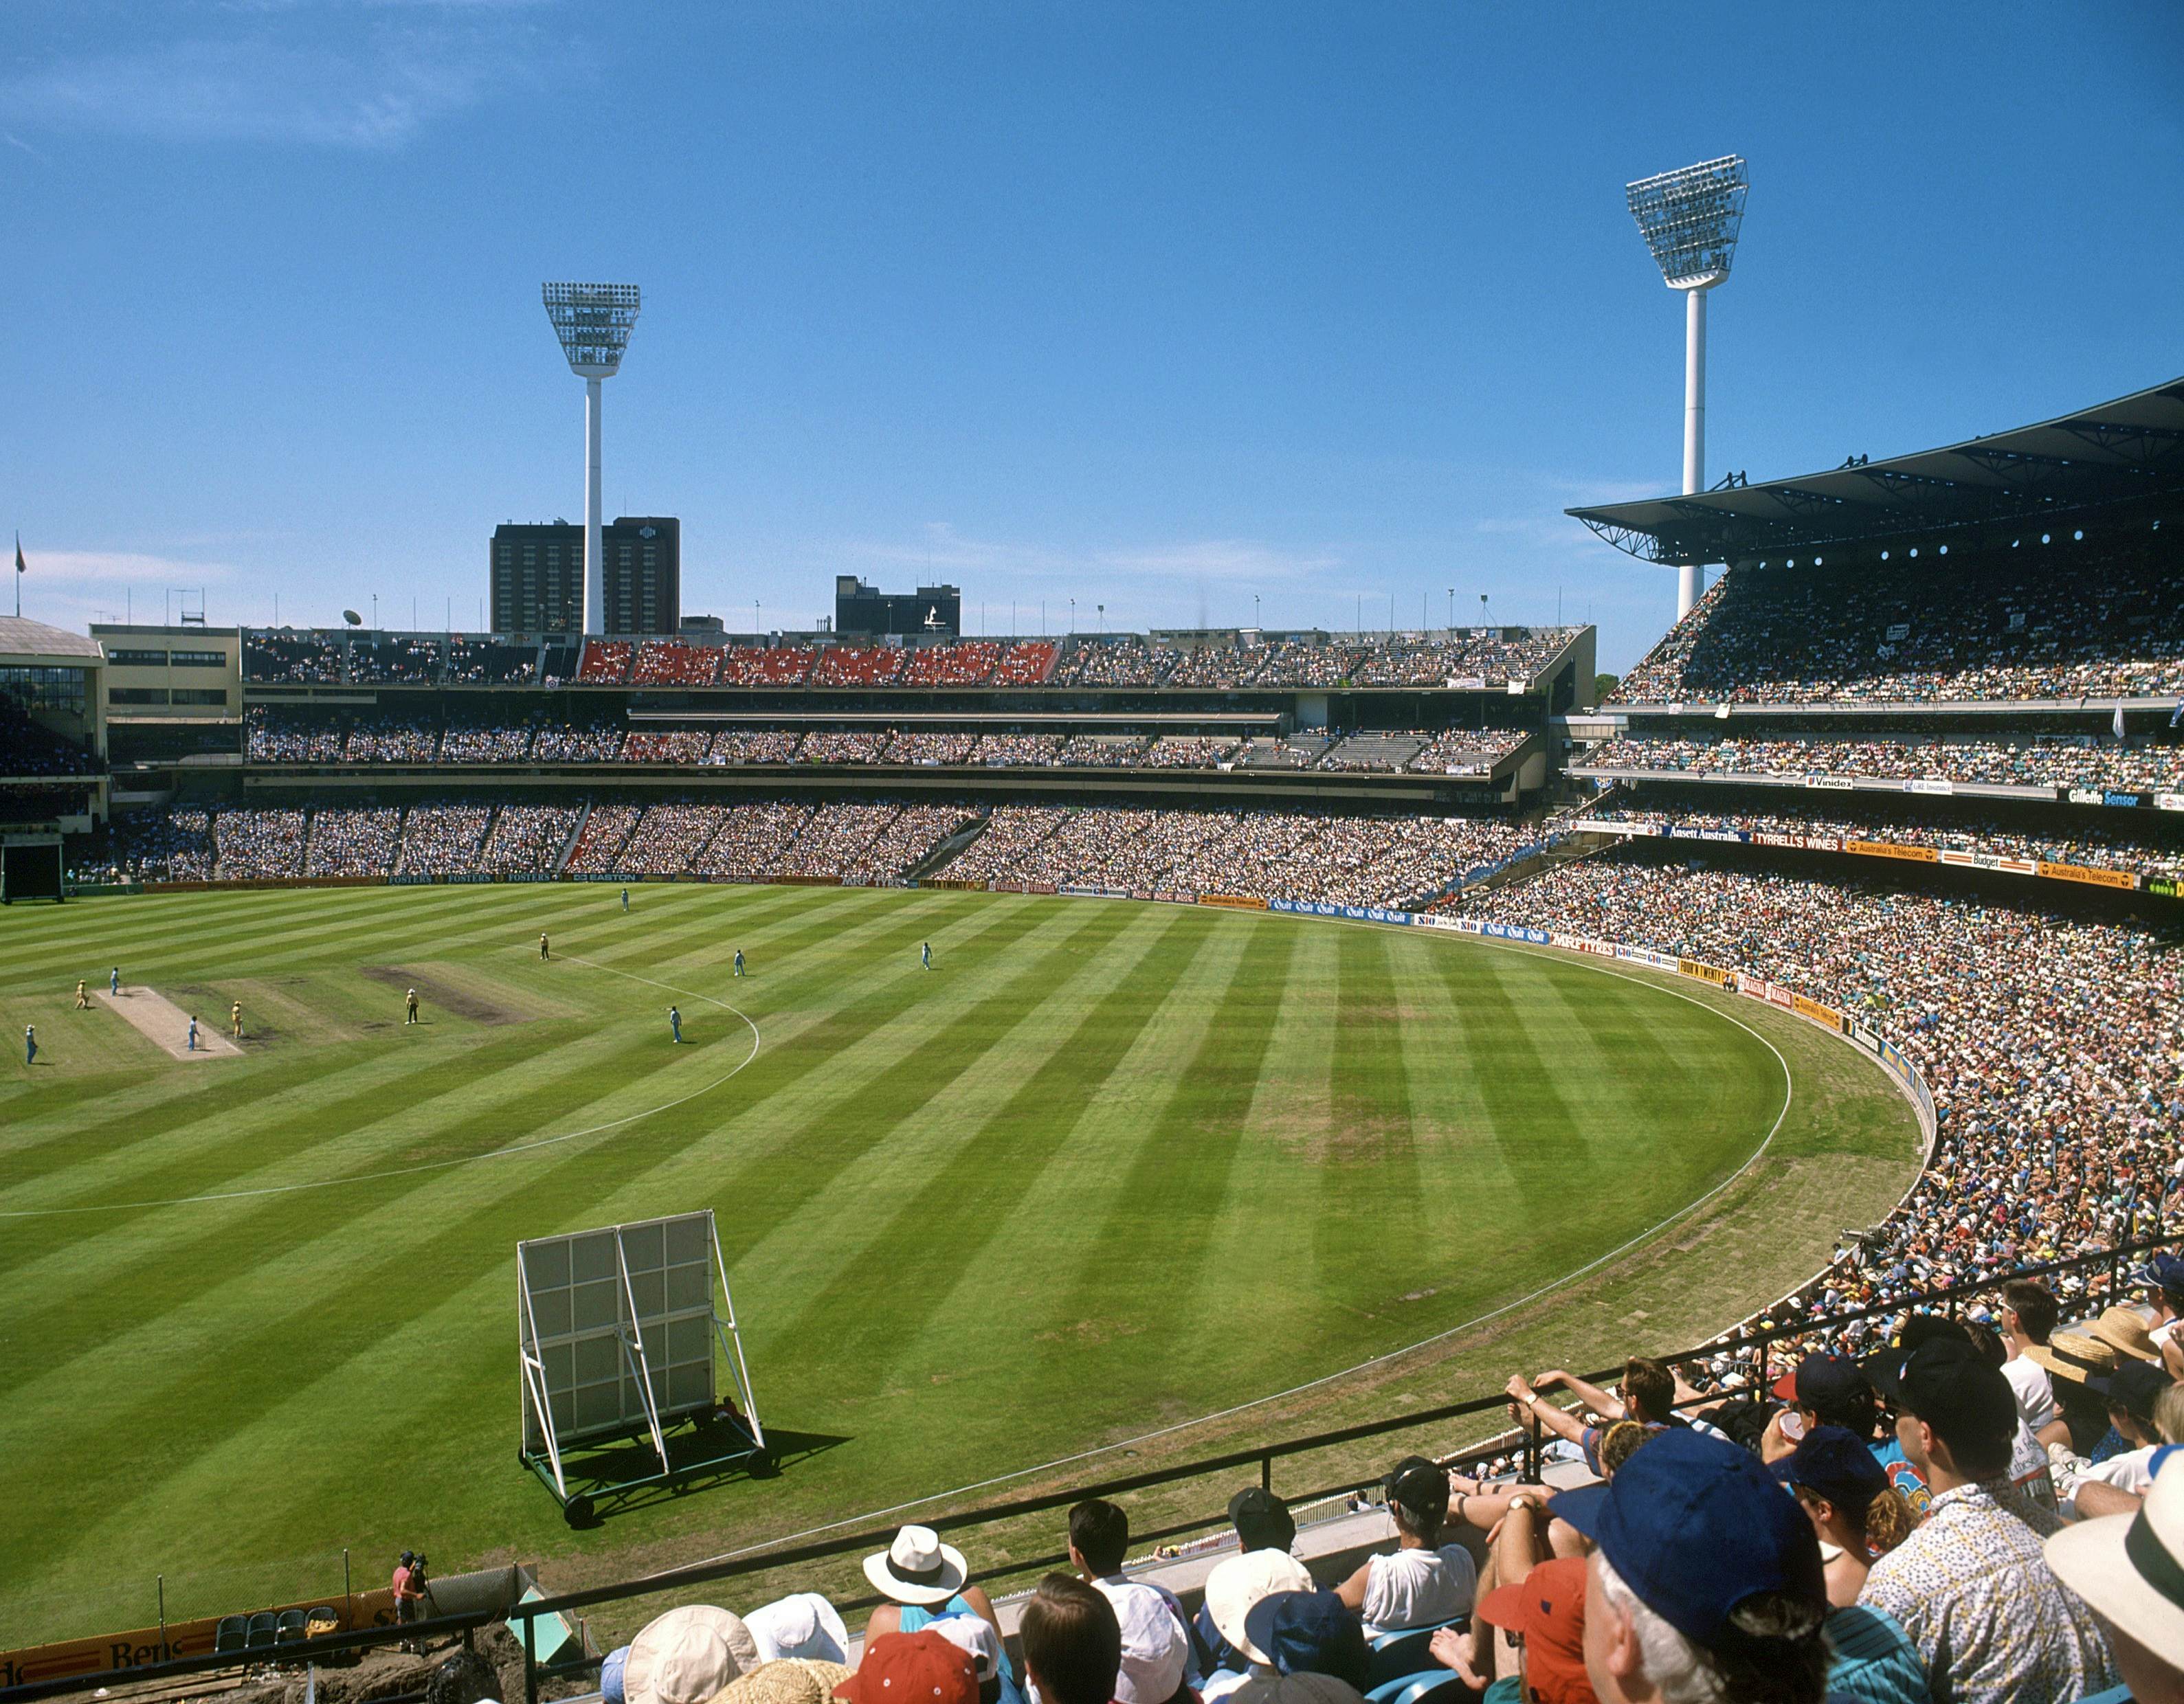 Melbourne cricket ground tour - Admissions